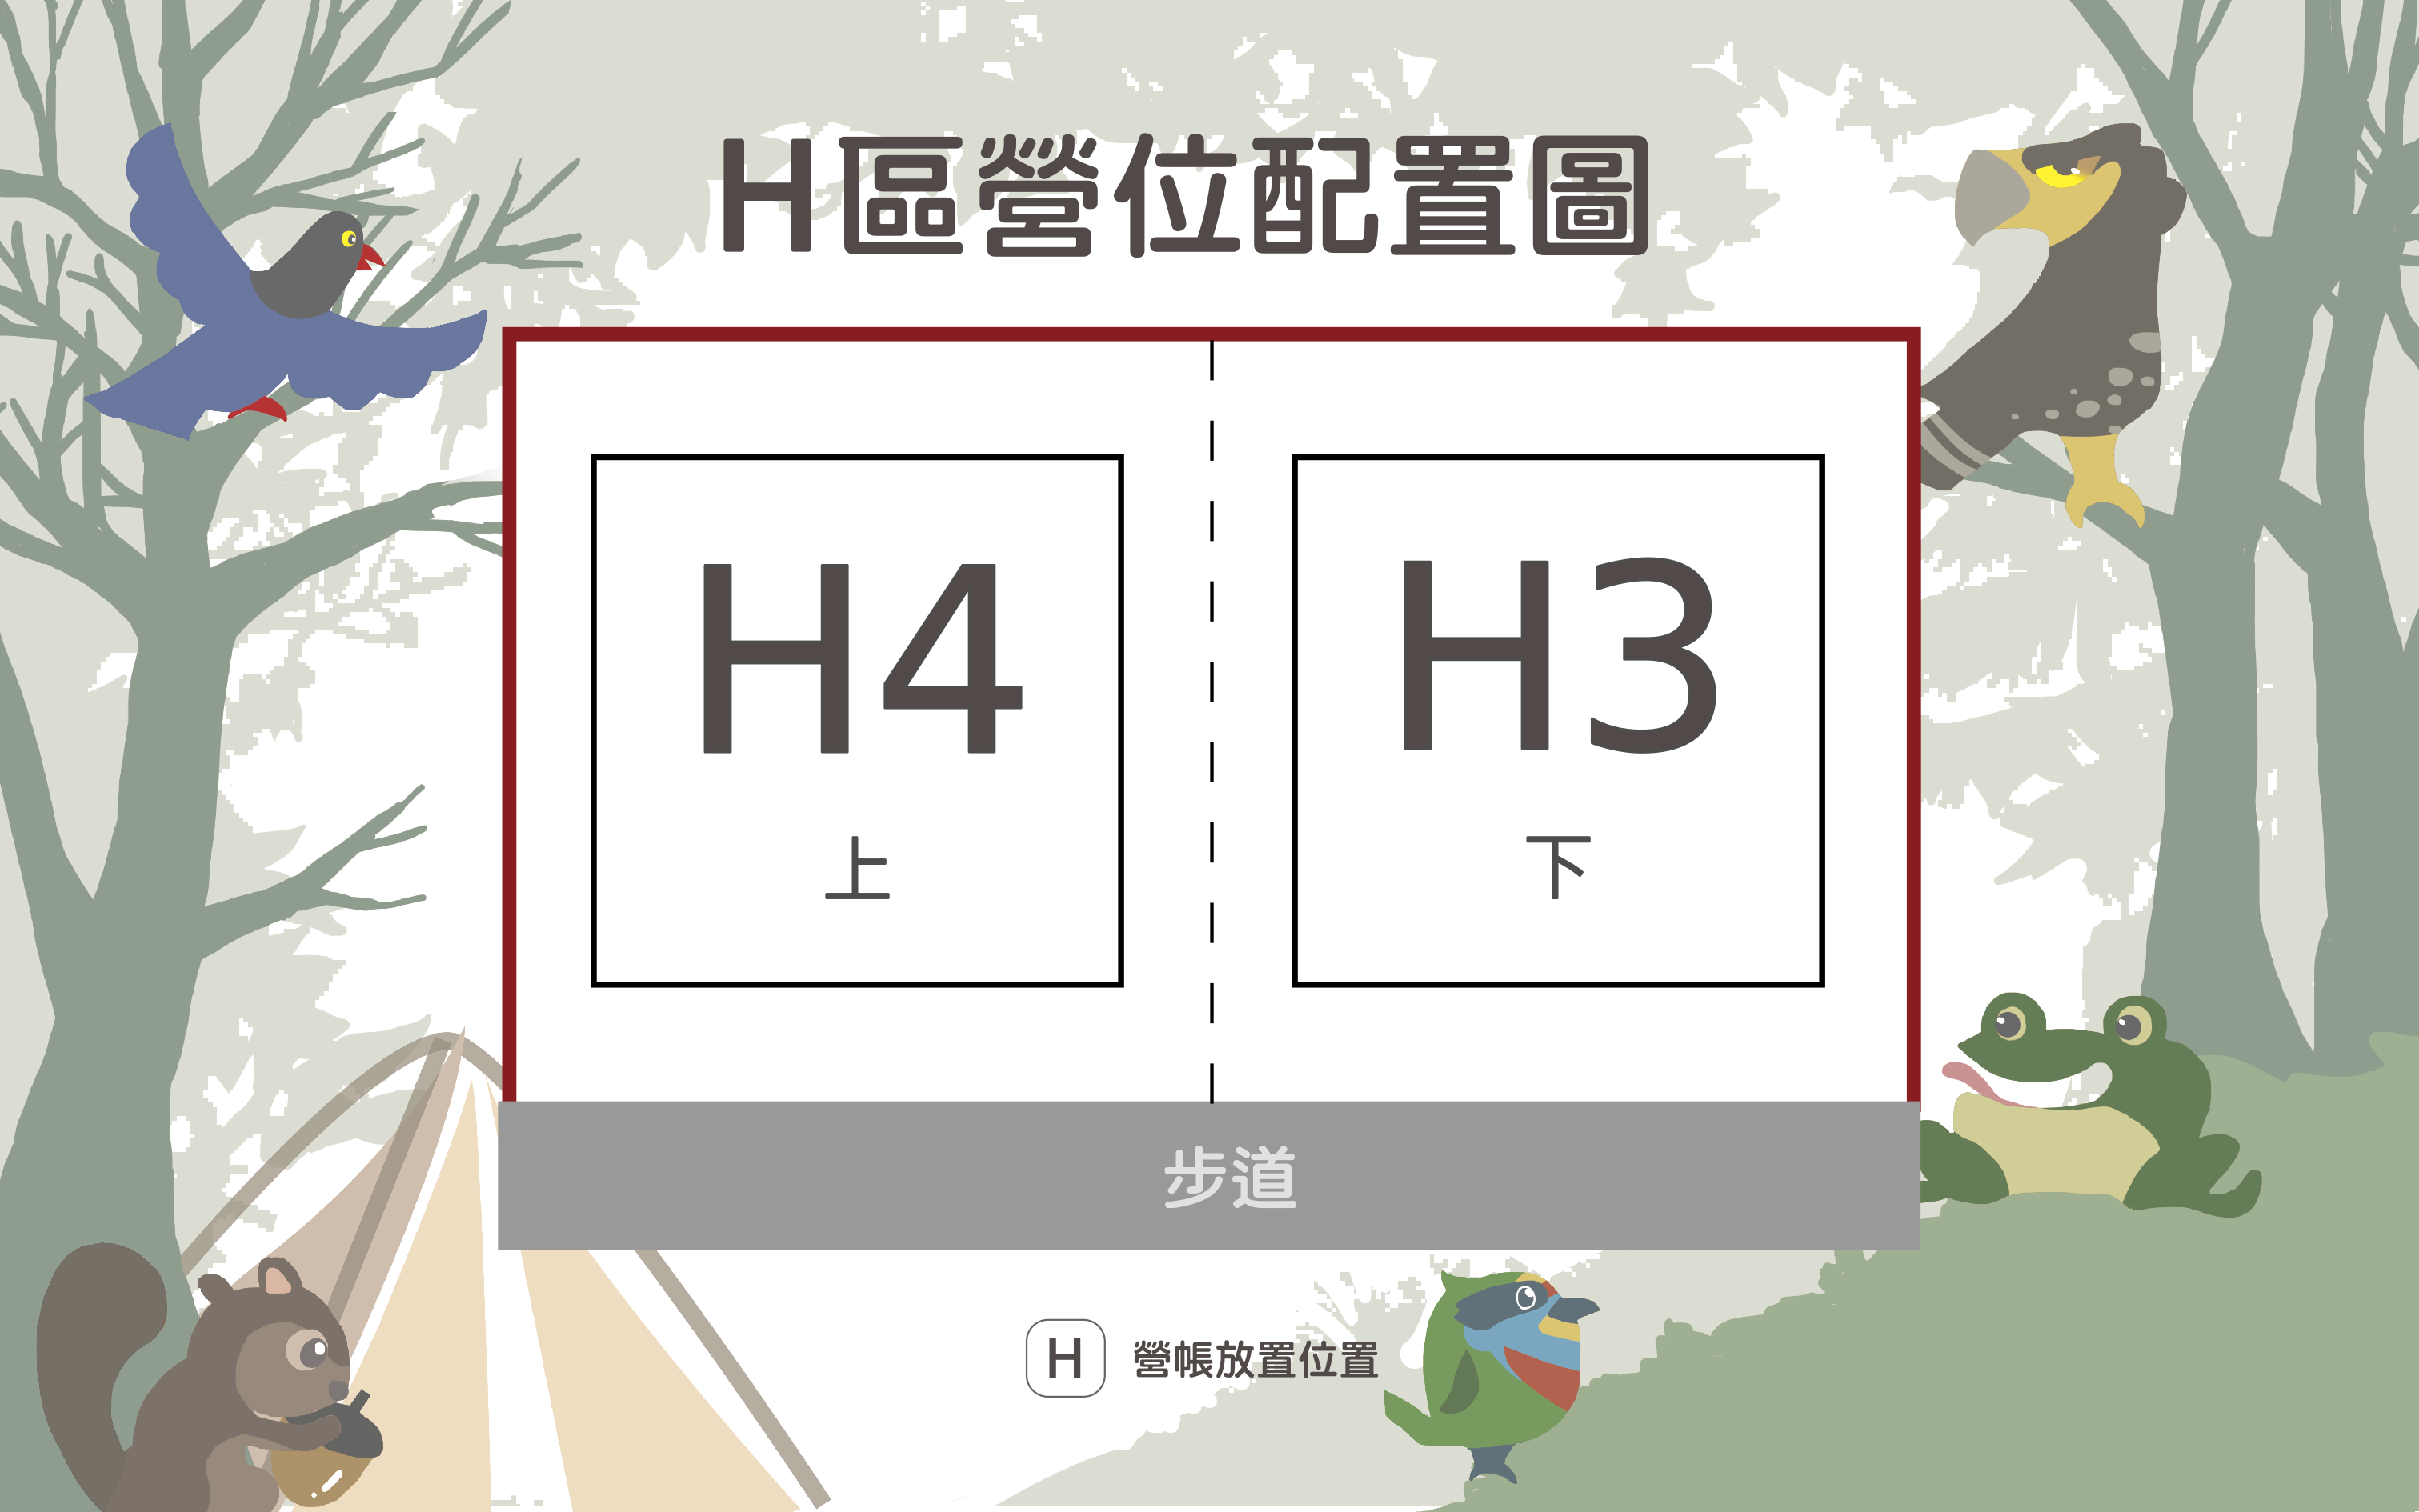 H3、H4區營位配置圖